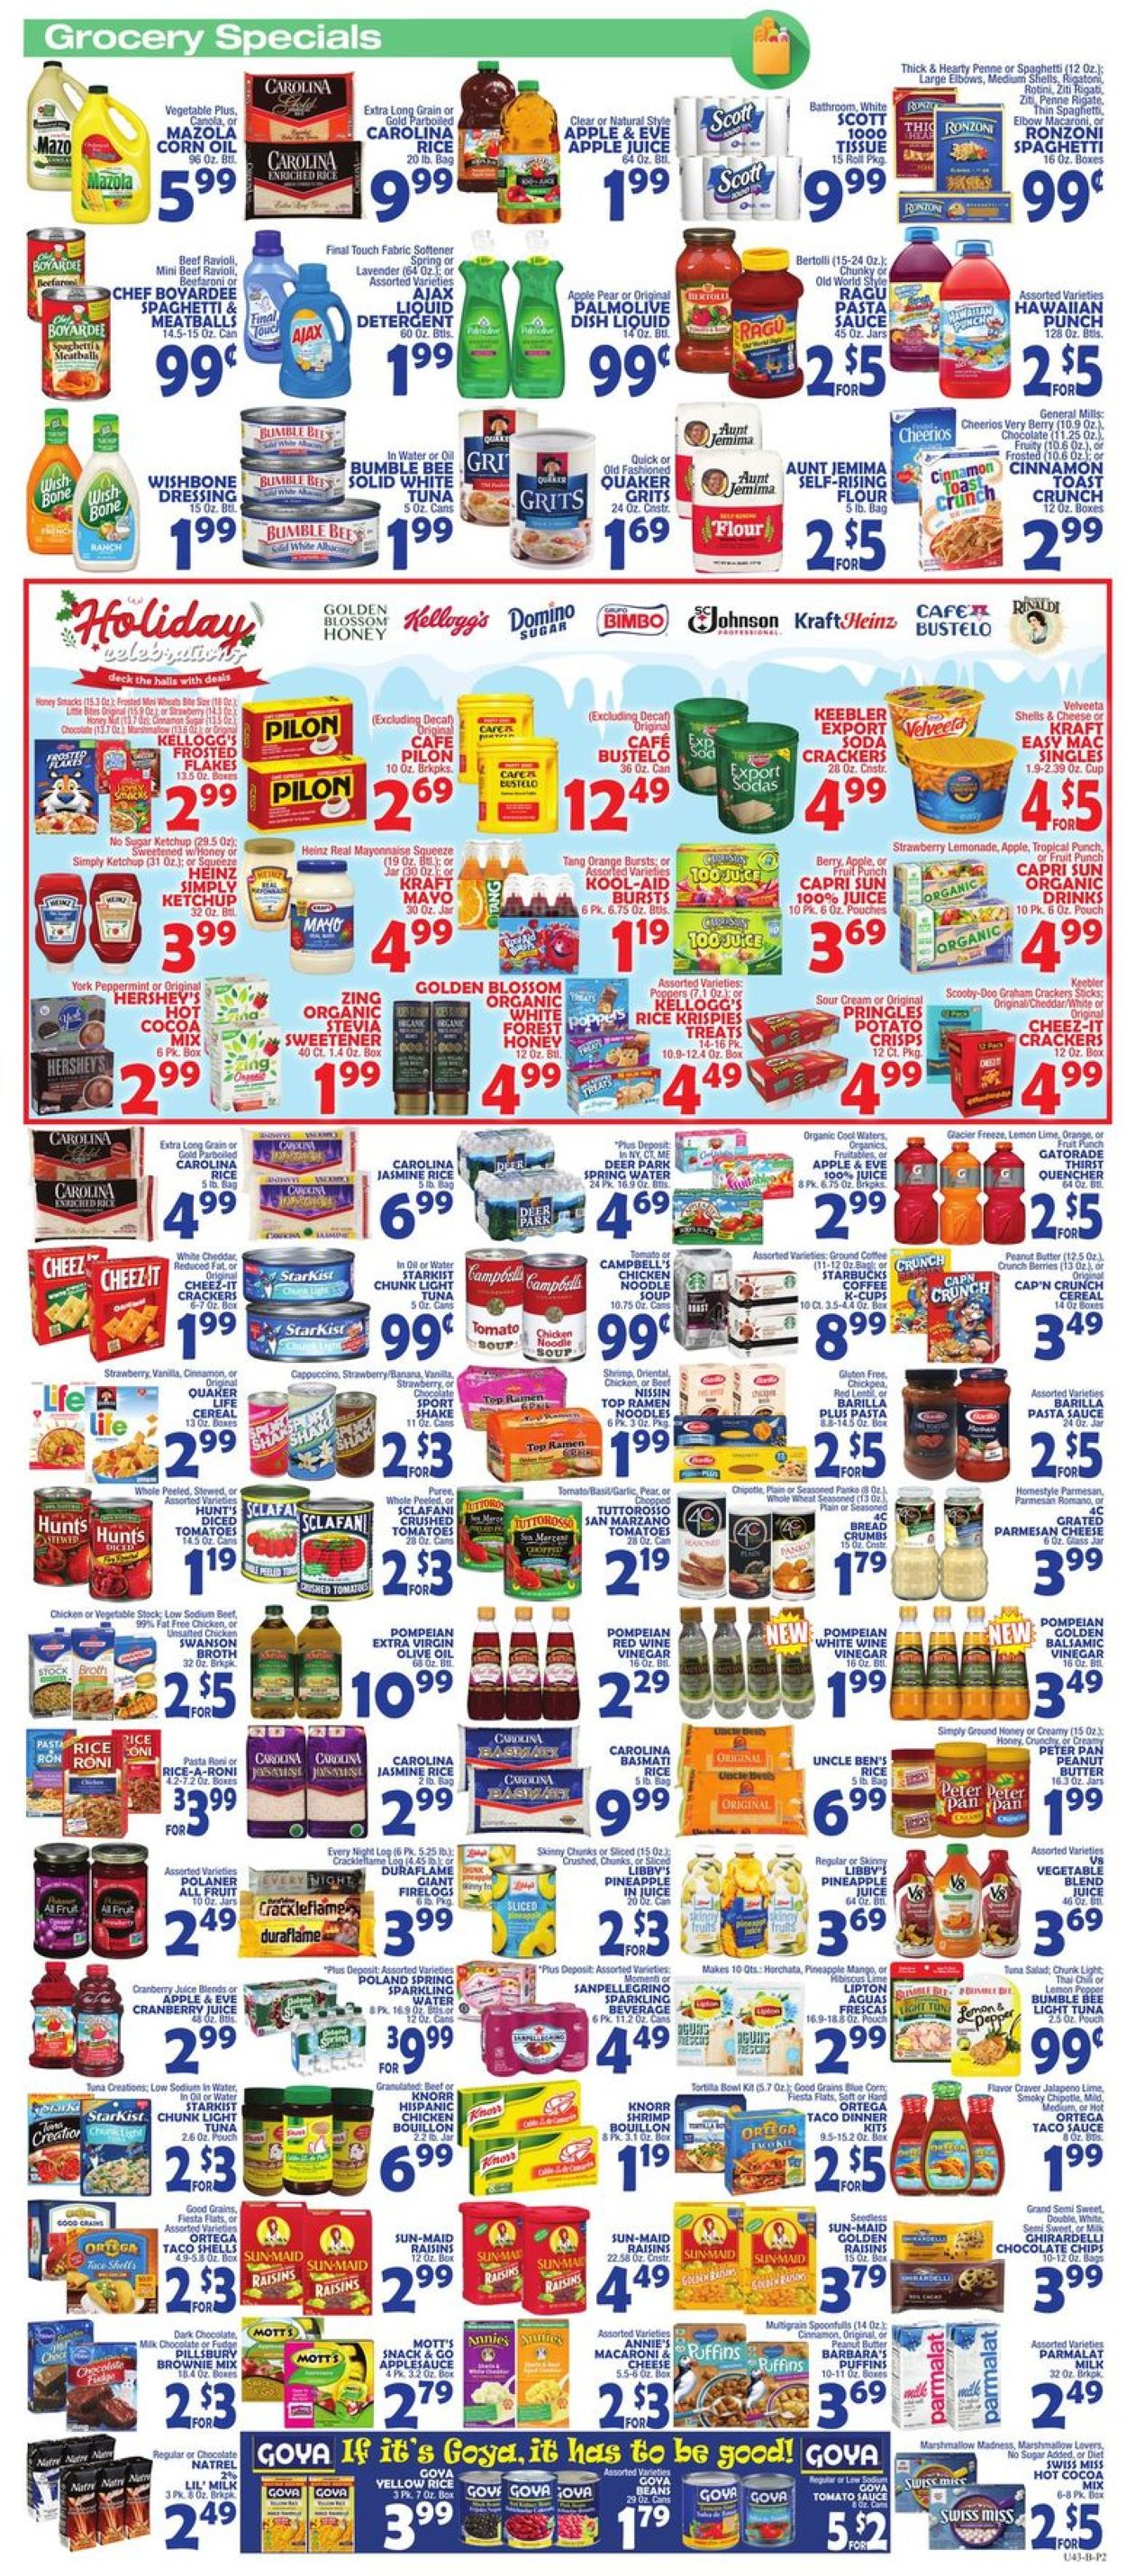 Catalogue Bravo Supermarkets - Holiday Ad 2019 from 12/06/2019